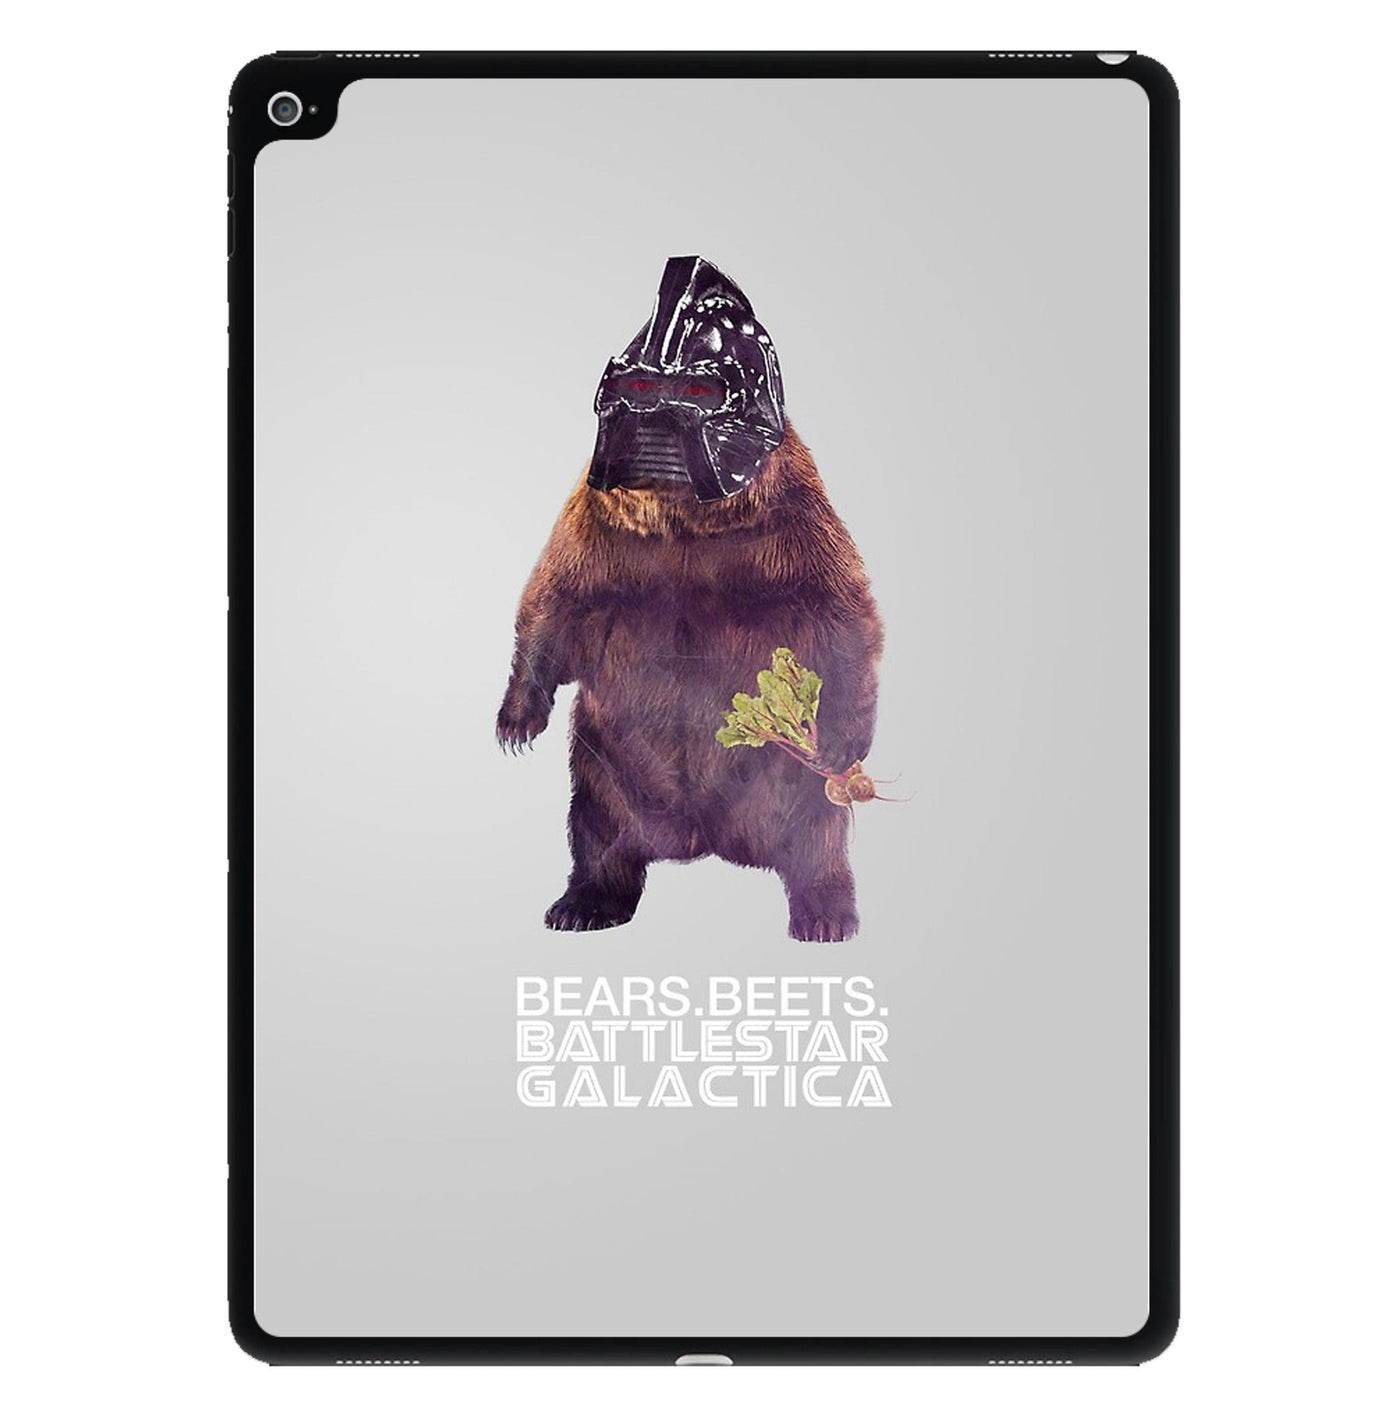 Bears Beets Battlestar Galactica - The Office iPad Case